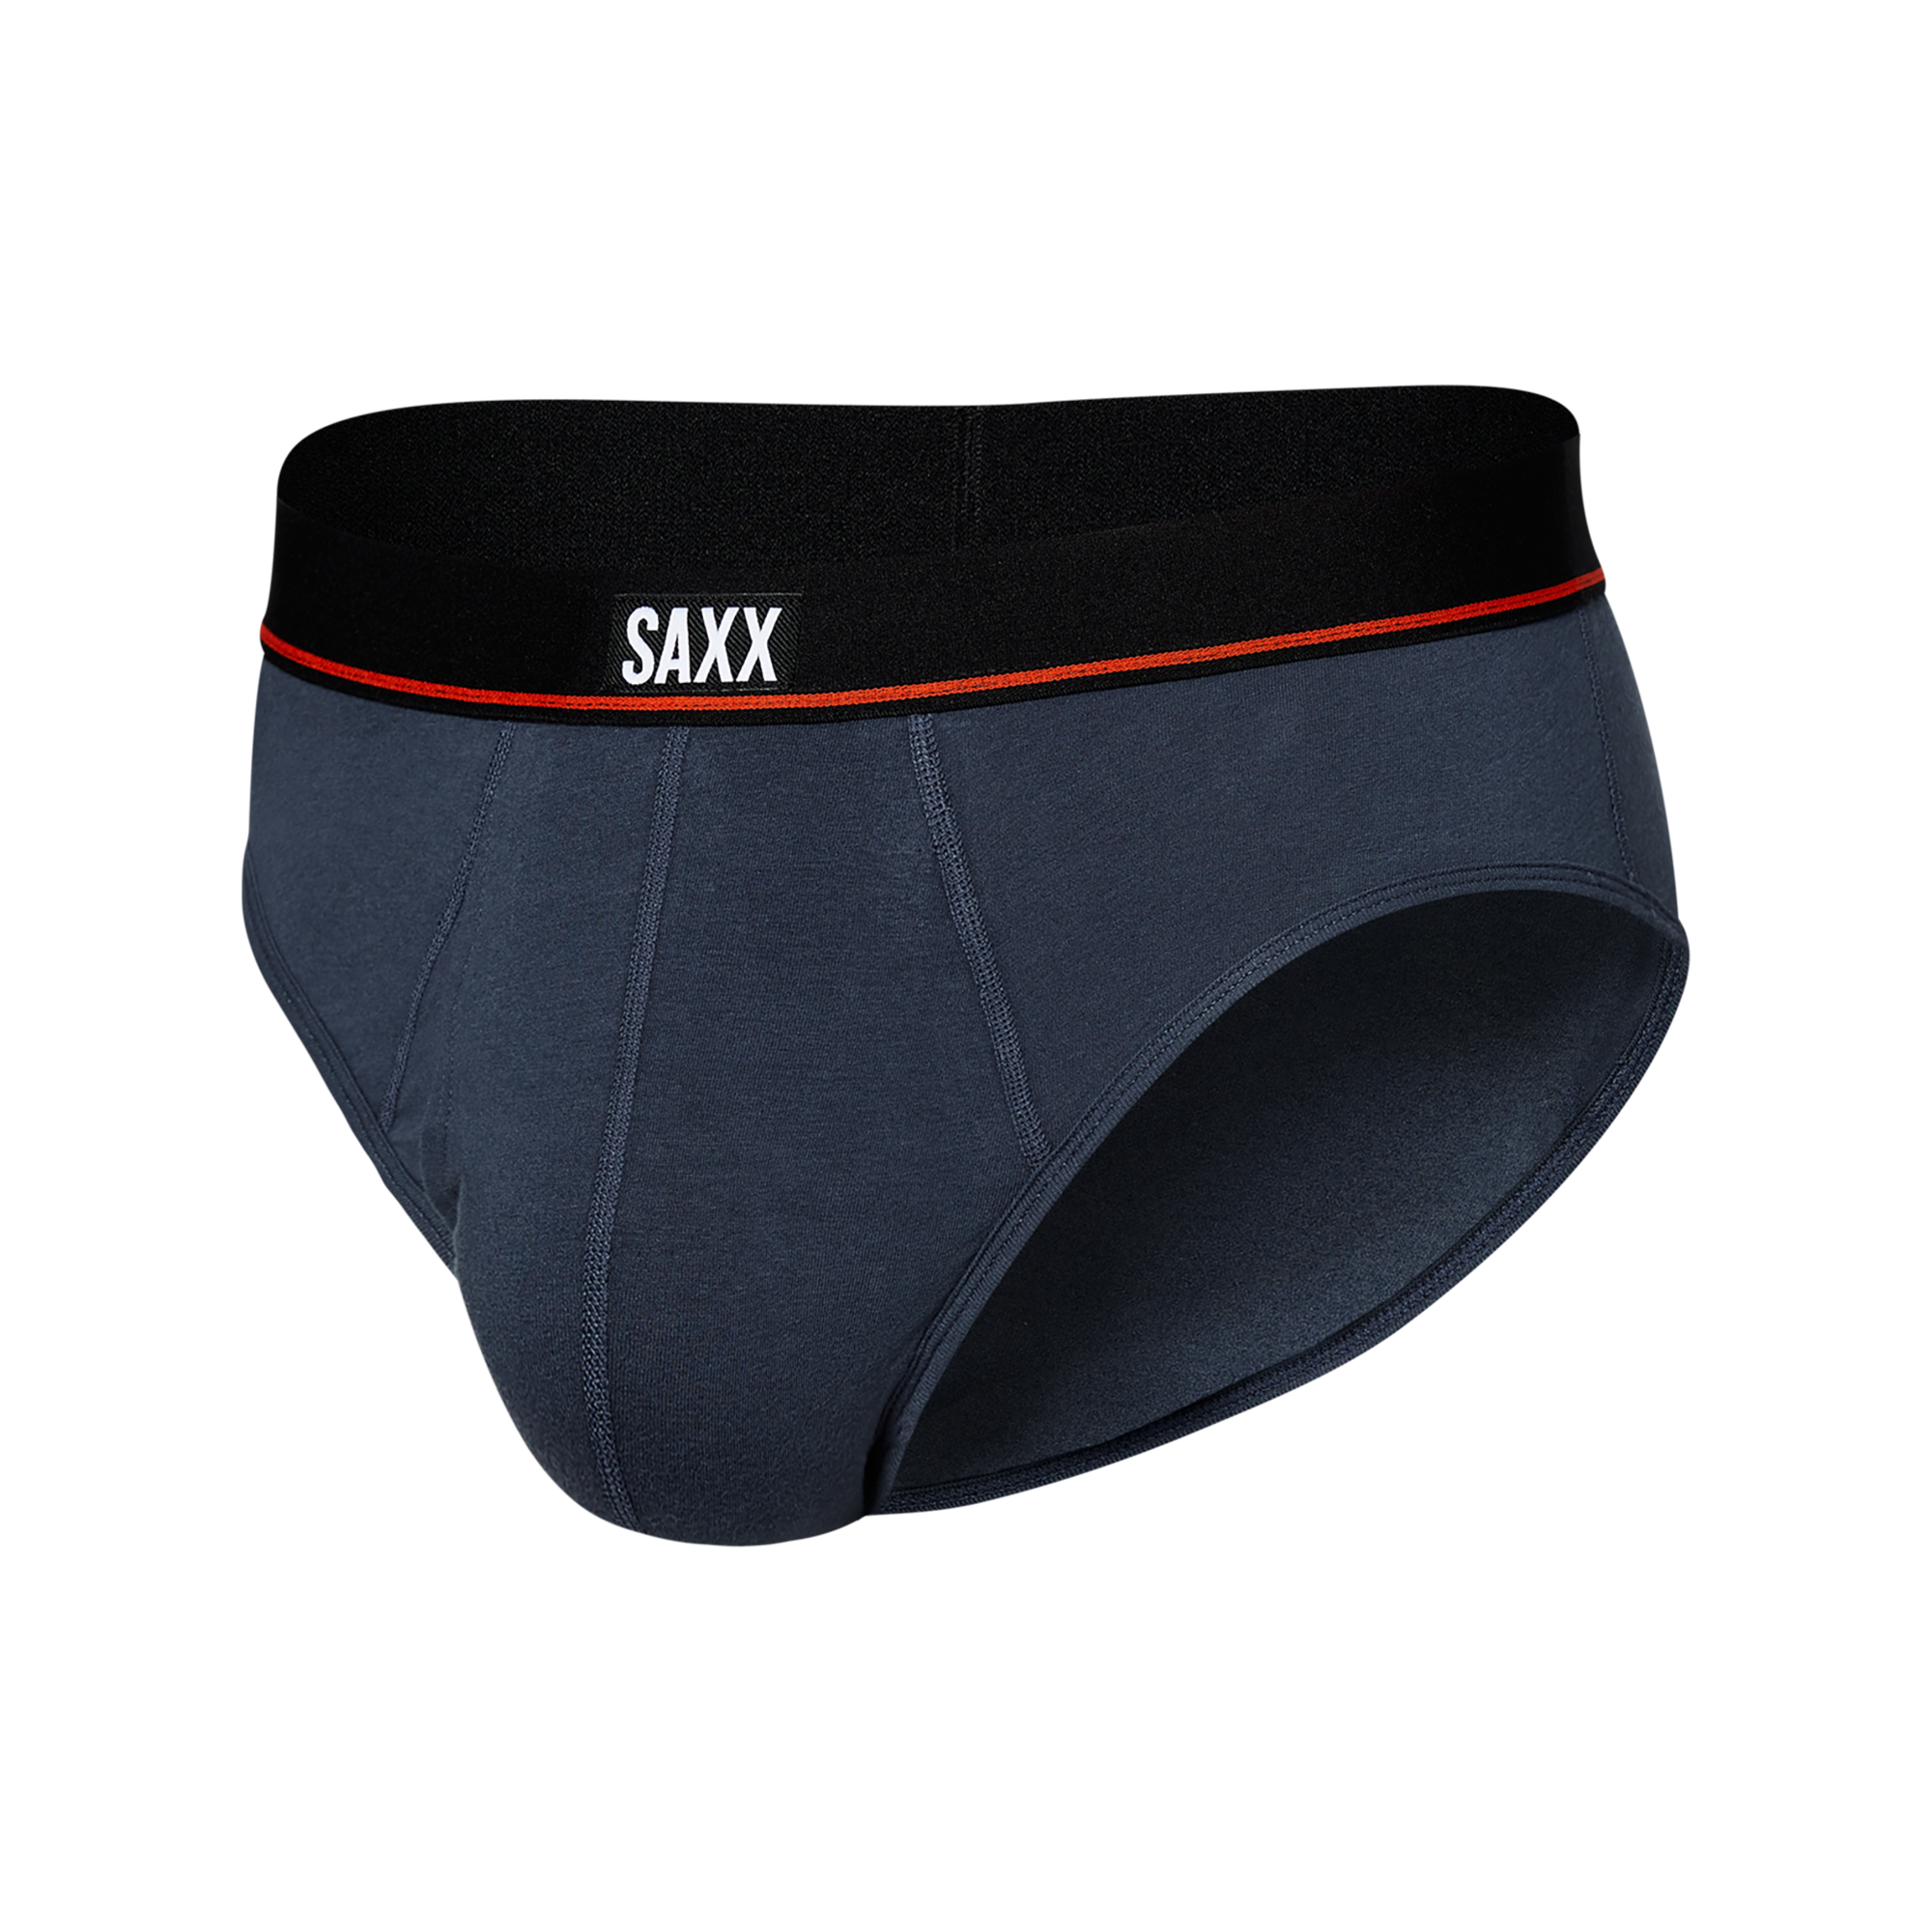 Buy Saxx M DROPTEMP COOLING COTTON TRUNK, Tidal Camo - Blue online